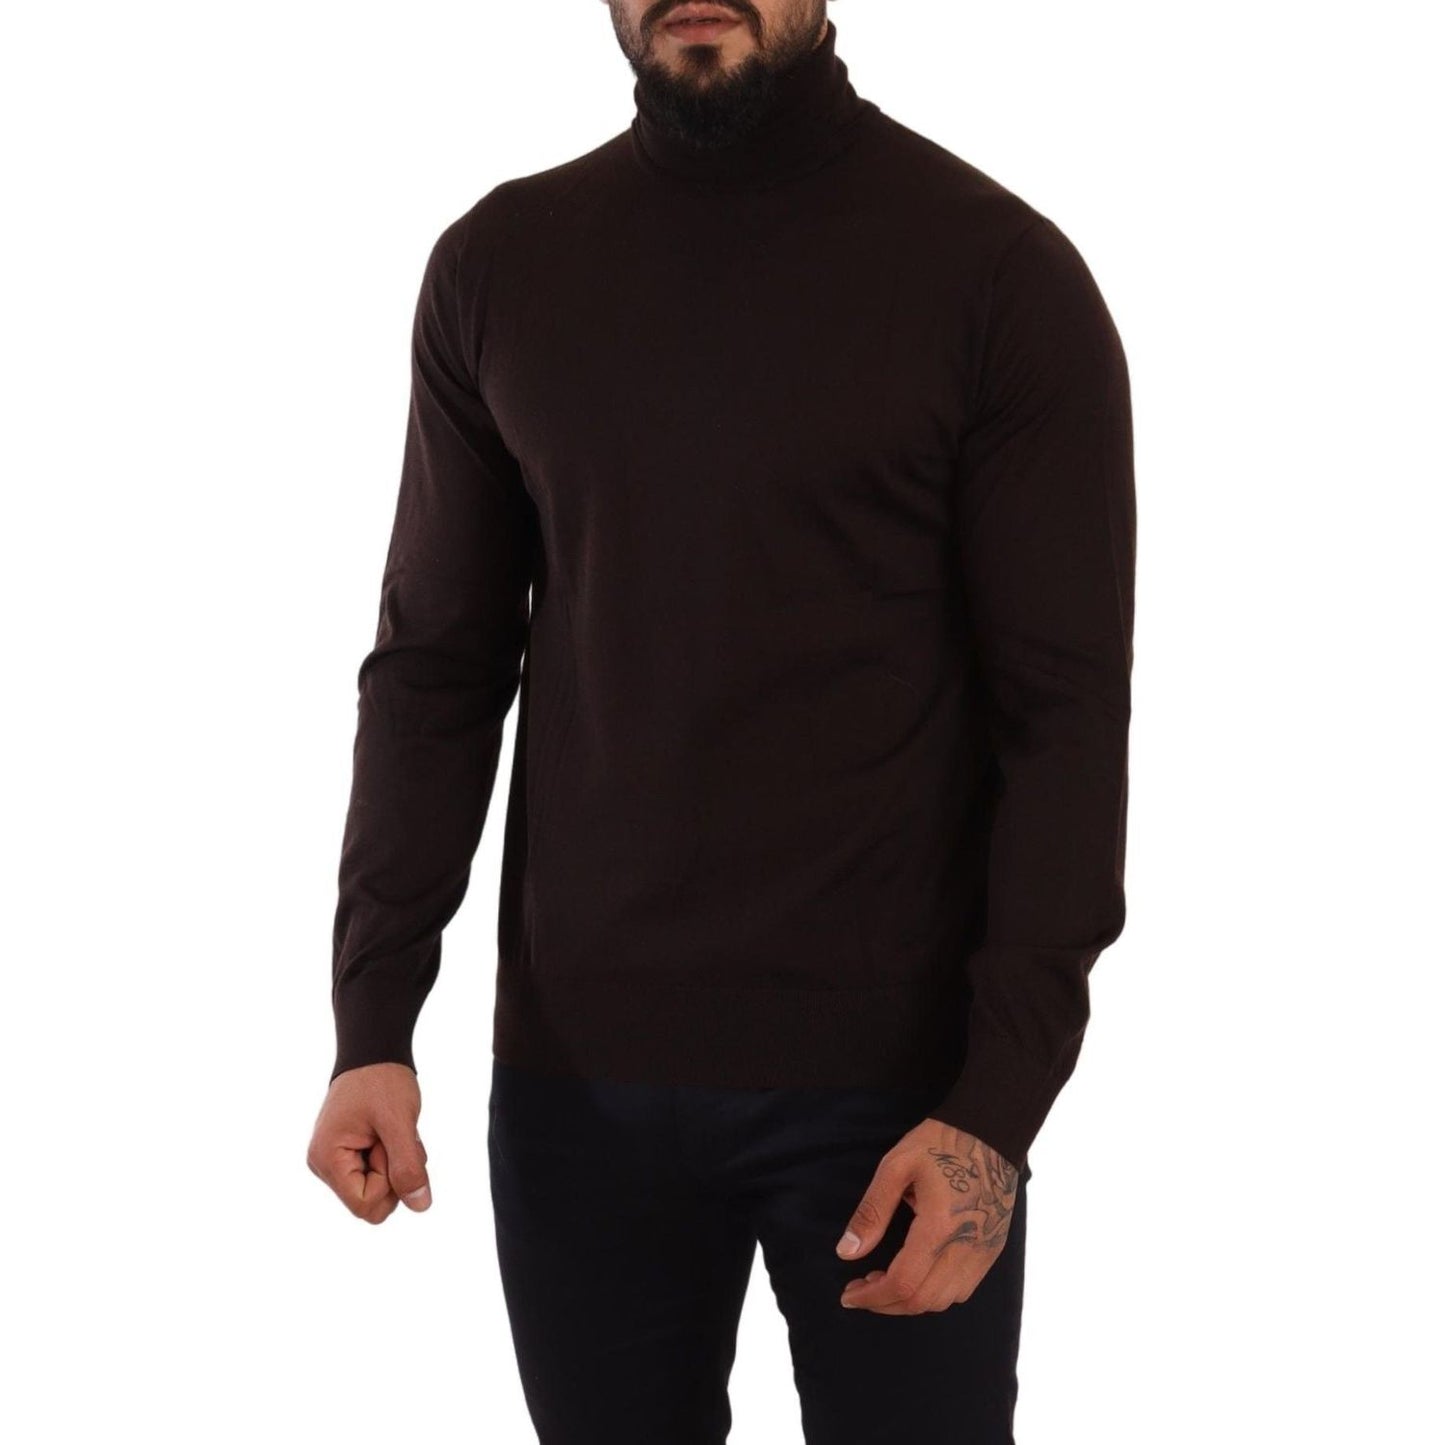 Dolce & Gabbana Elegant Cashmere Turtleneck Sweater Suit brown-cashmere-turtleneck-pullover-sweater-2